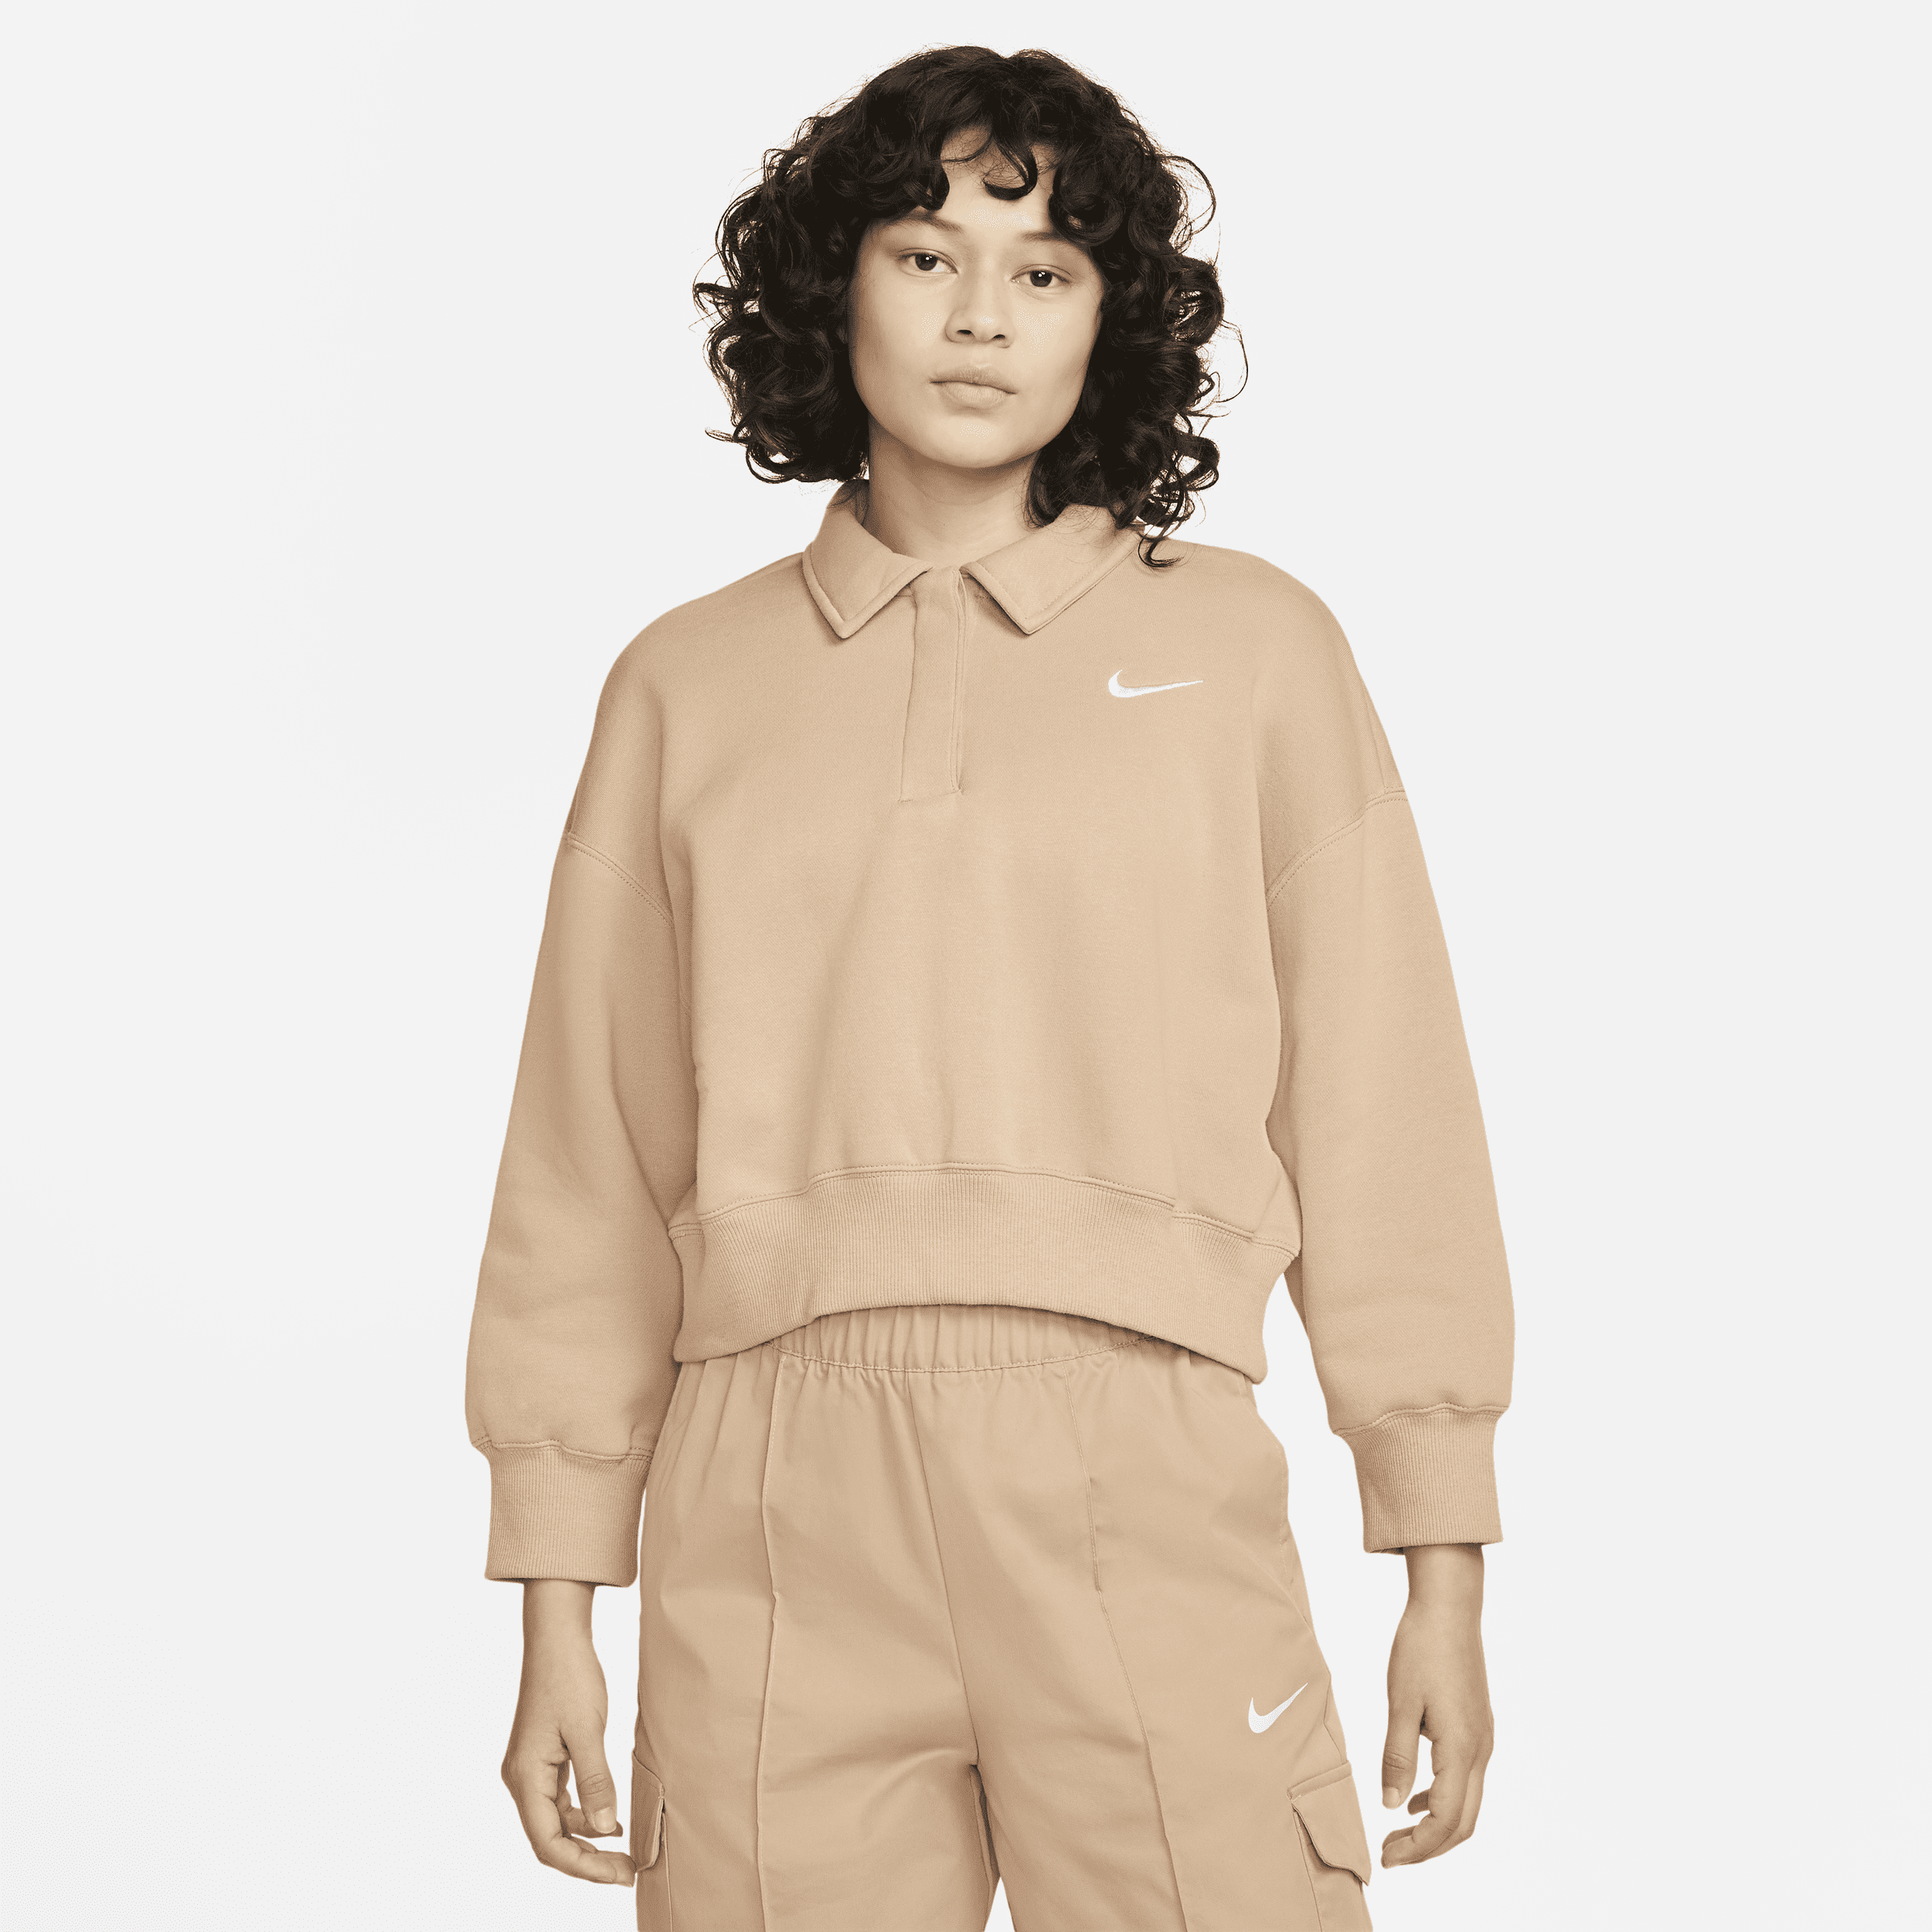 Kort Nike Sportswear Phoenix Fleece-polosweatshirt med 3/4-ærmer til kvinder - brun